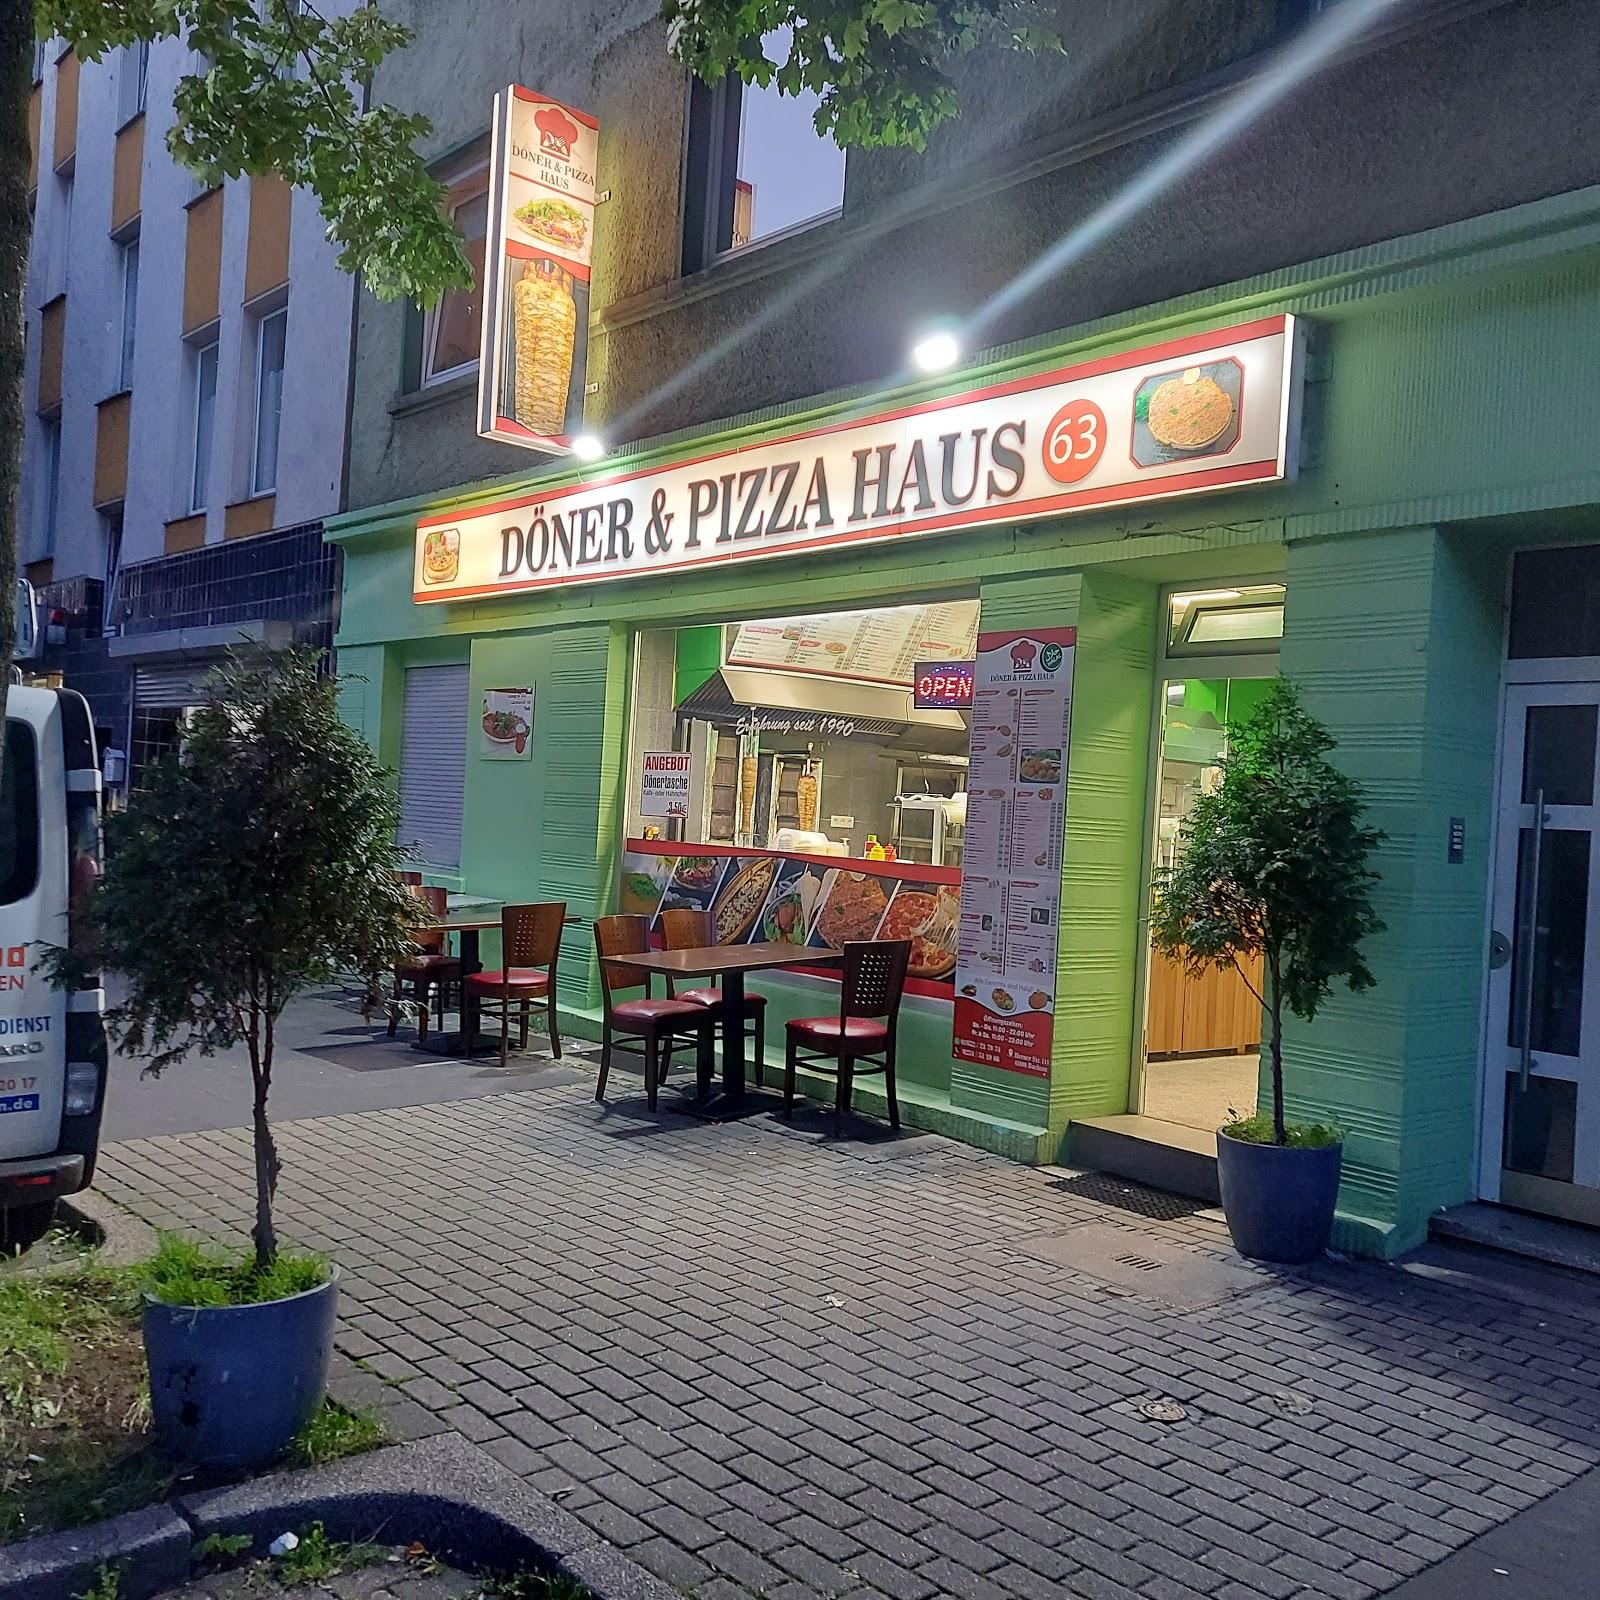 Restaurant "Döner & Pizza Haus" in Bochum